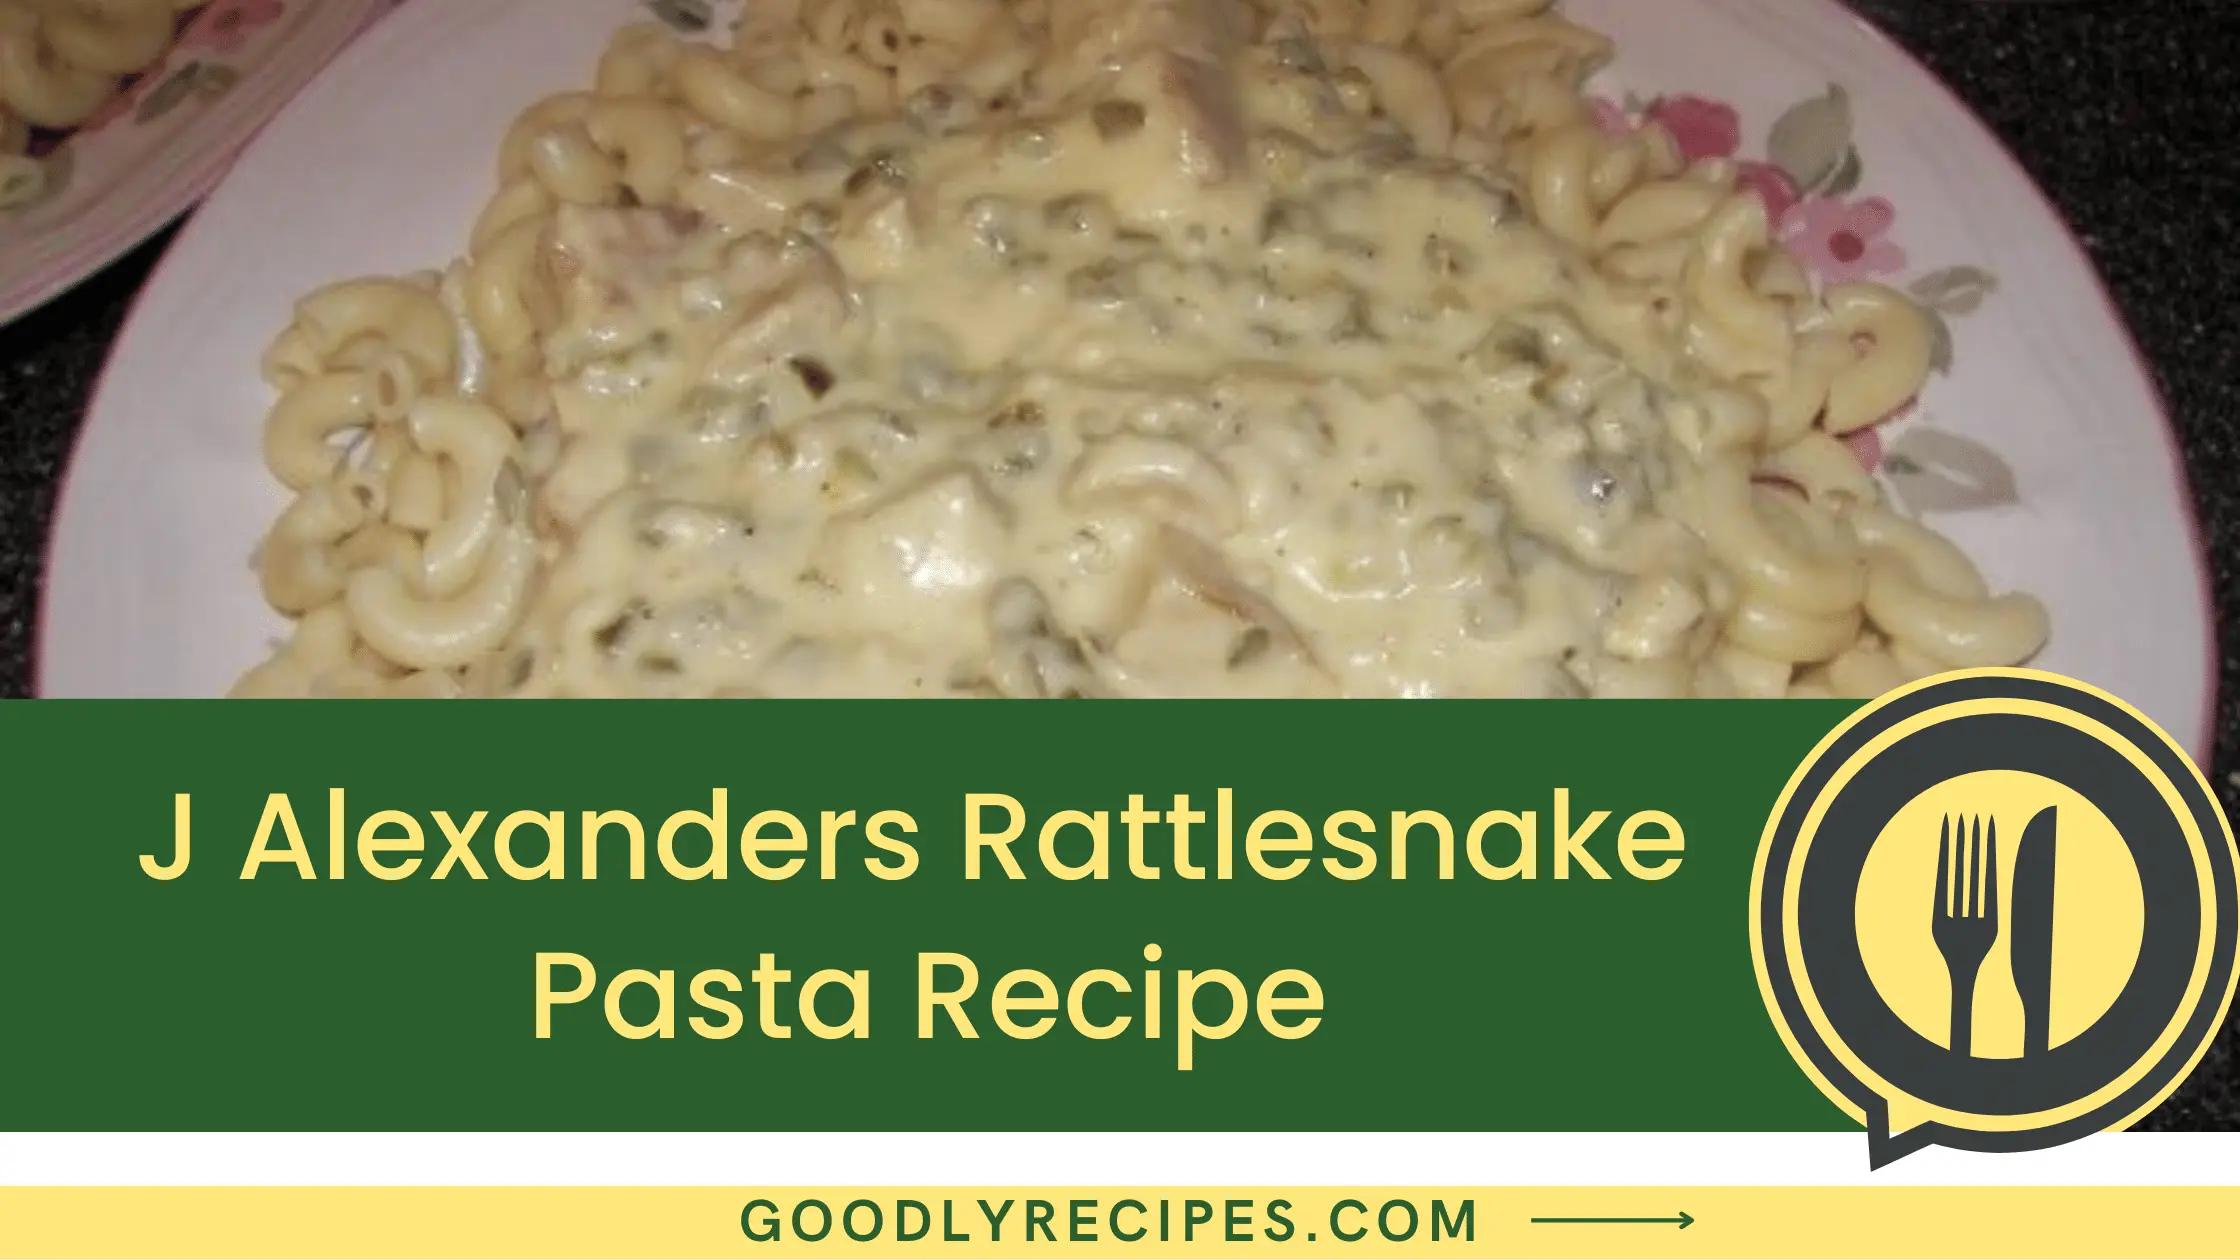 What is Rattlesnake Pasta?